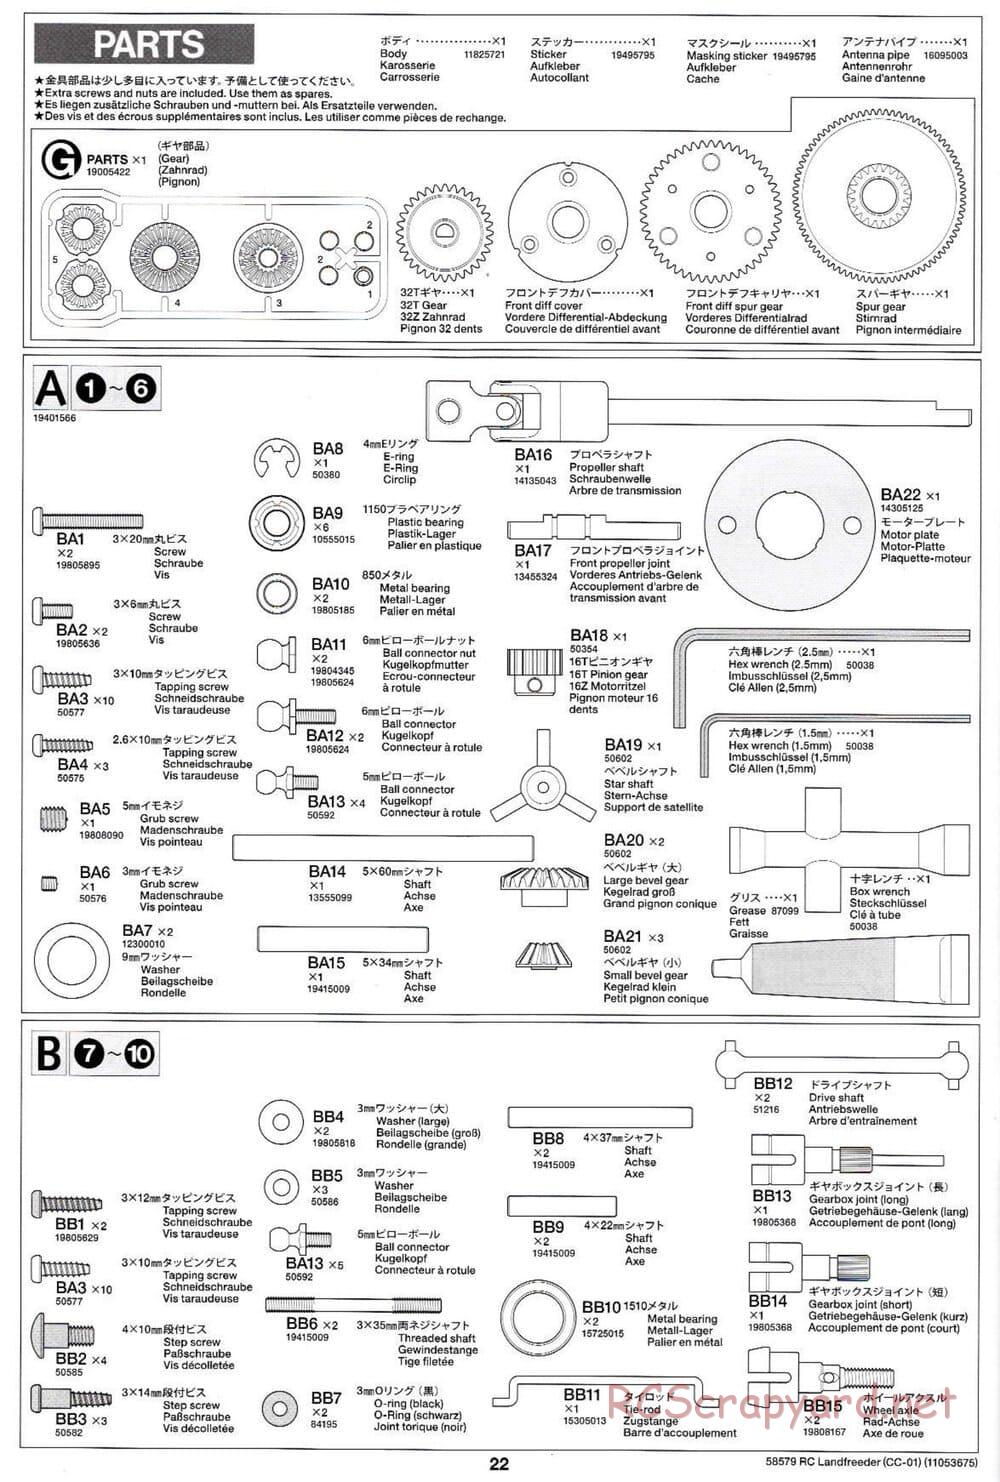 Tamiya - LandFreeder - CC-01 Chassis - Manual - Page 22